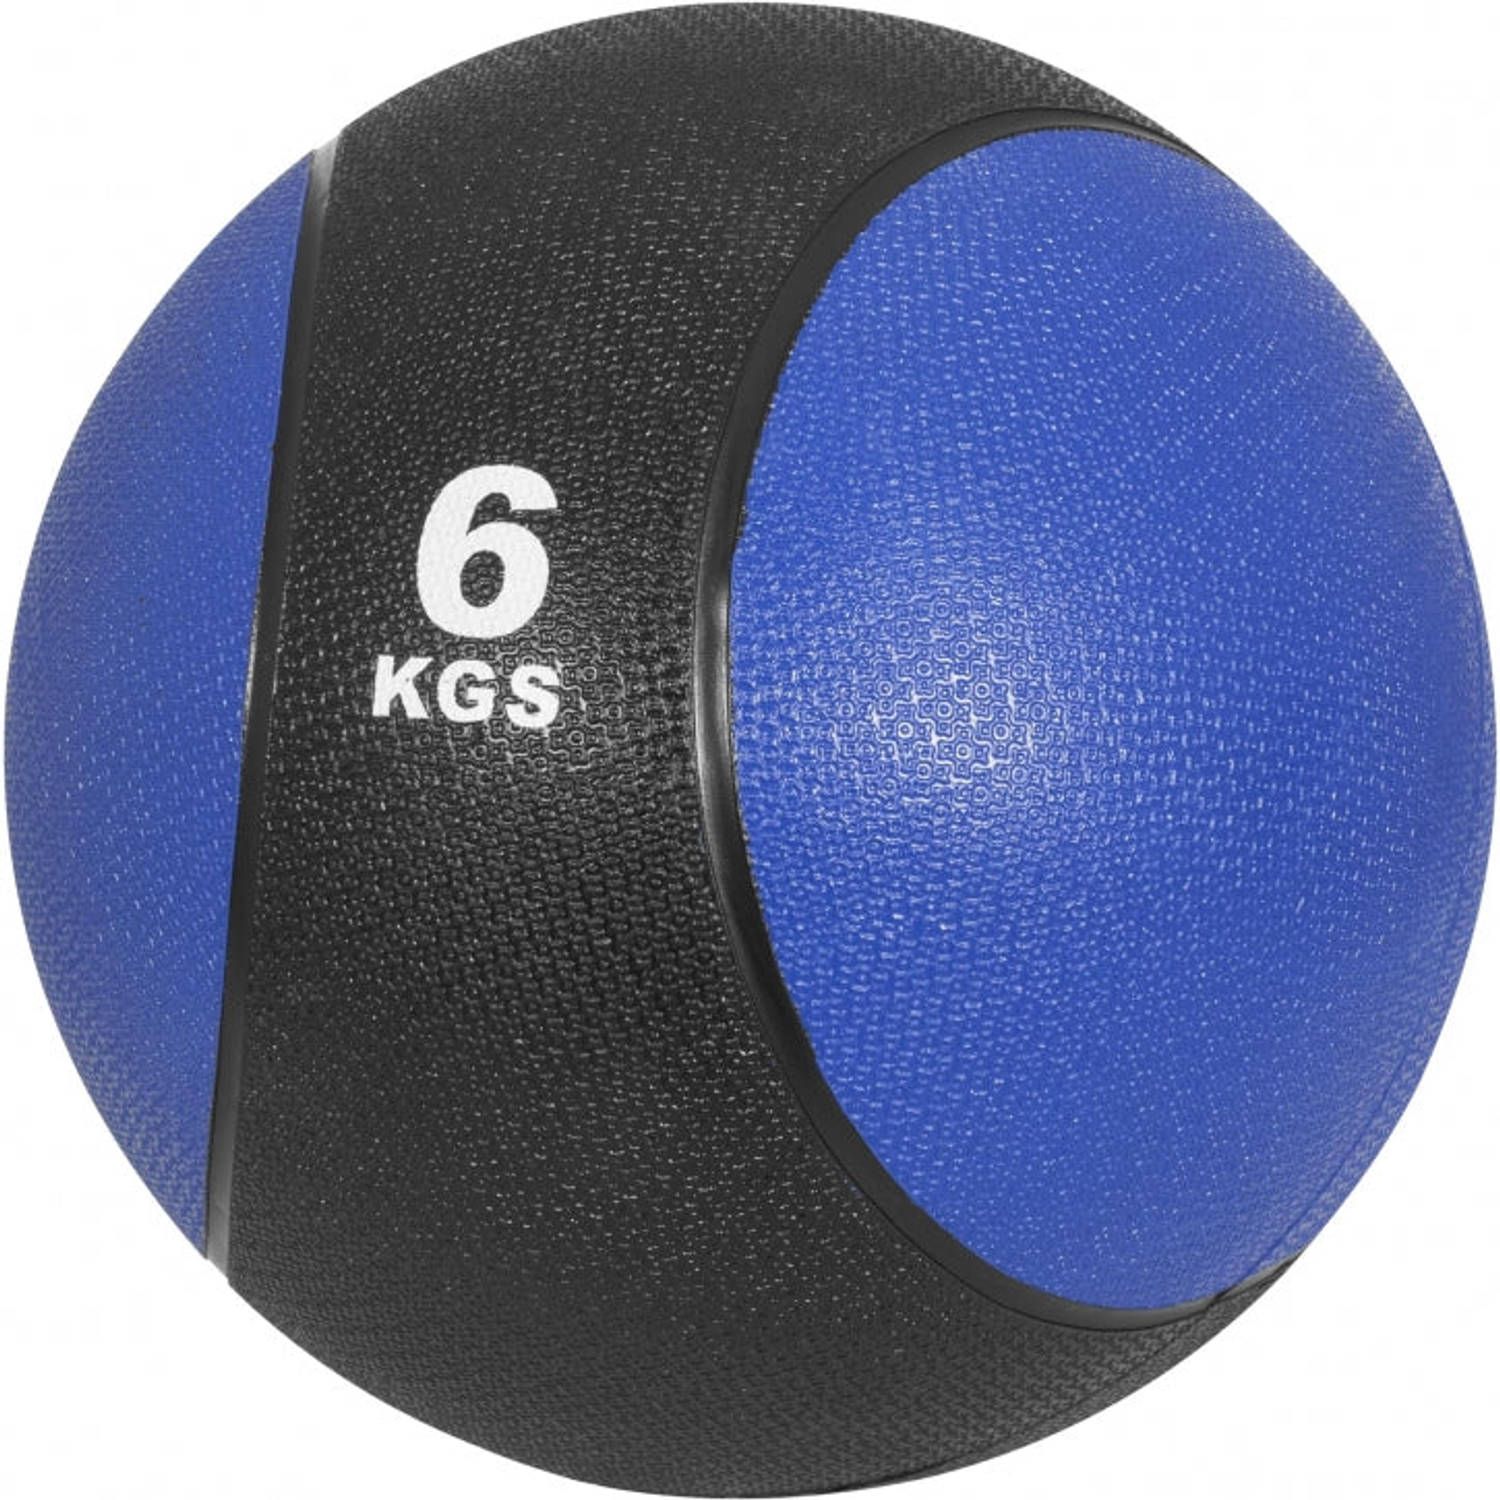 Medicine Ball 6 kg